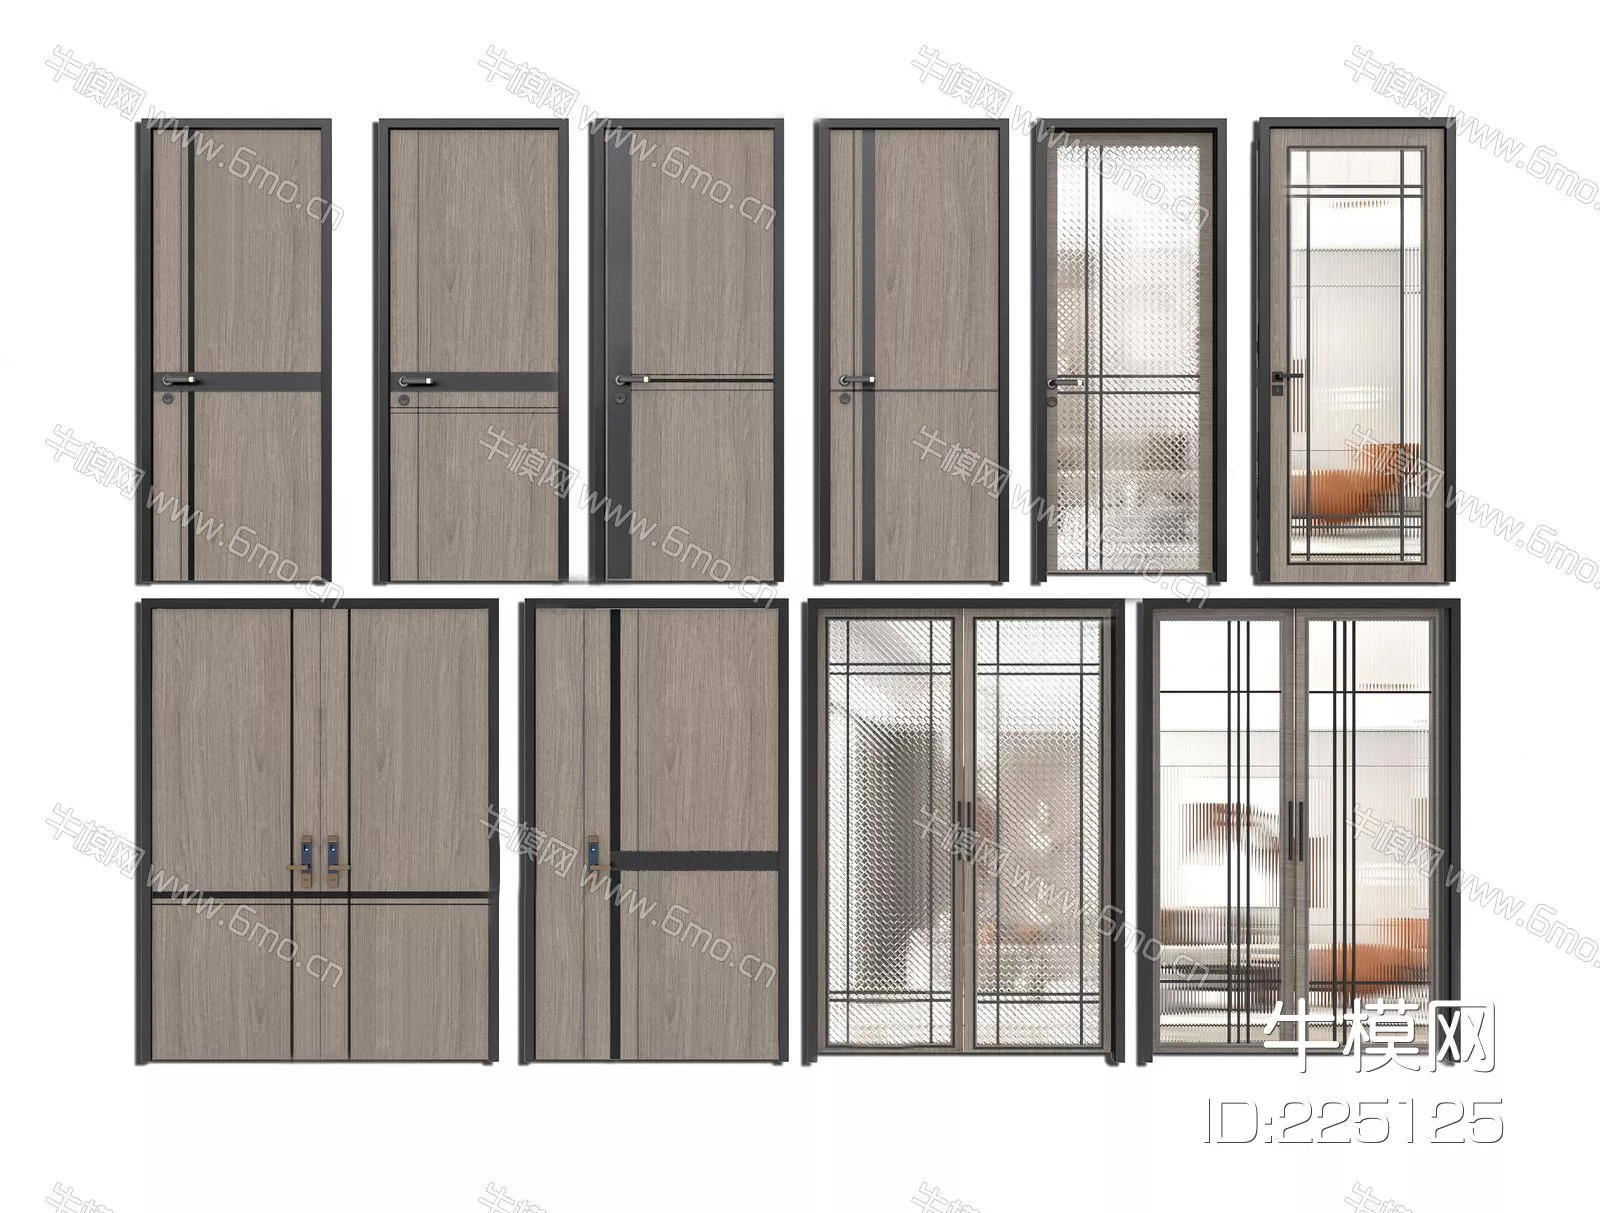 MODERN DOOR AND WINDOWS - SKETCHUP 3D MODEL - ENSCAPE - 225125